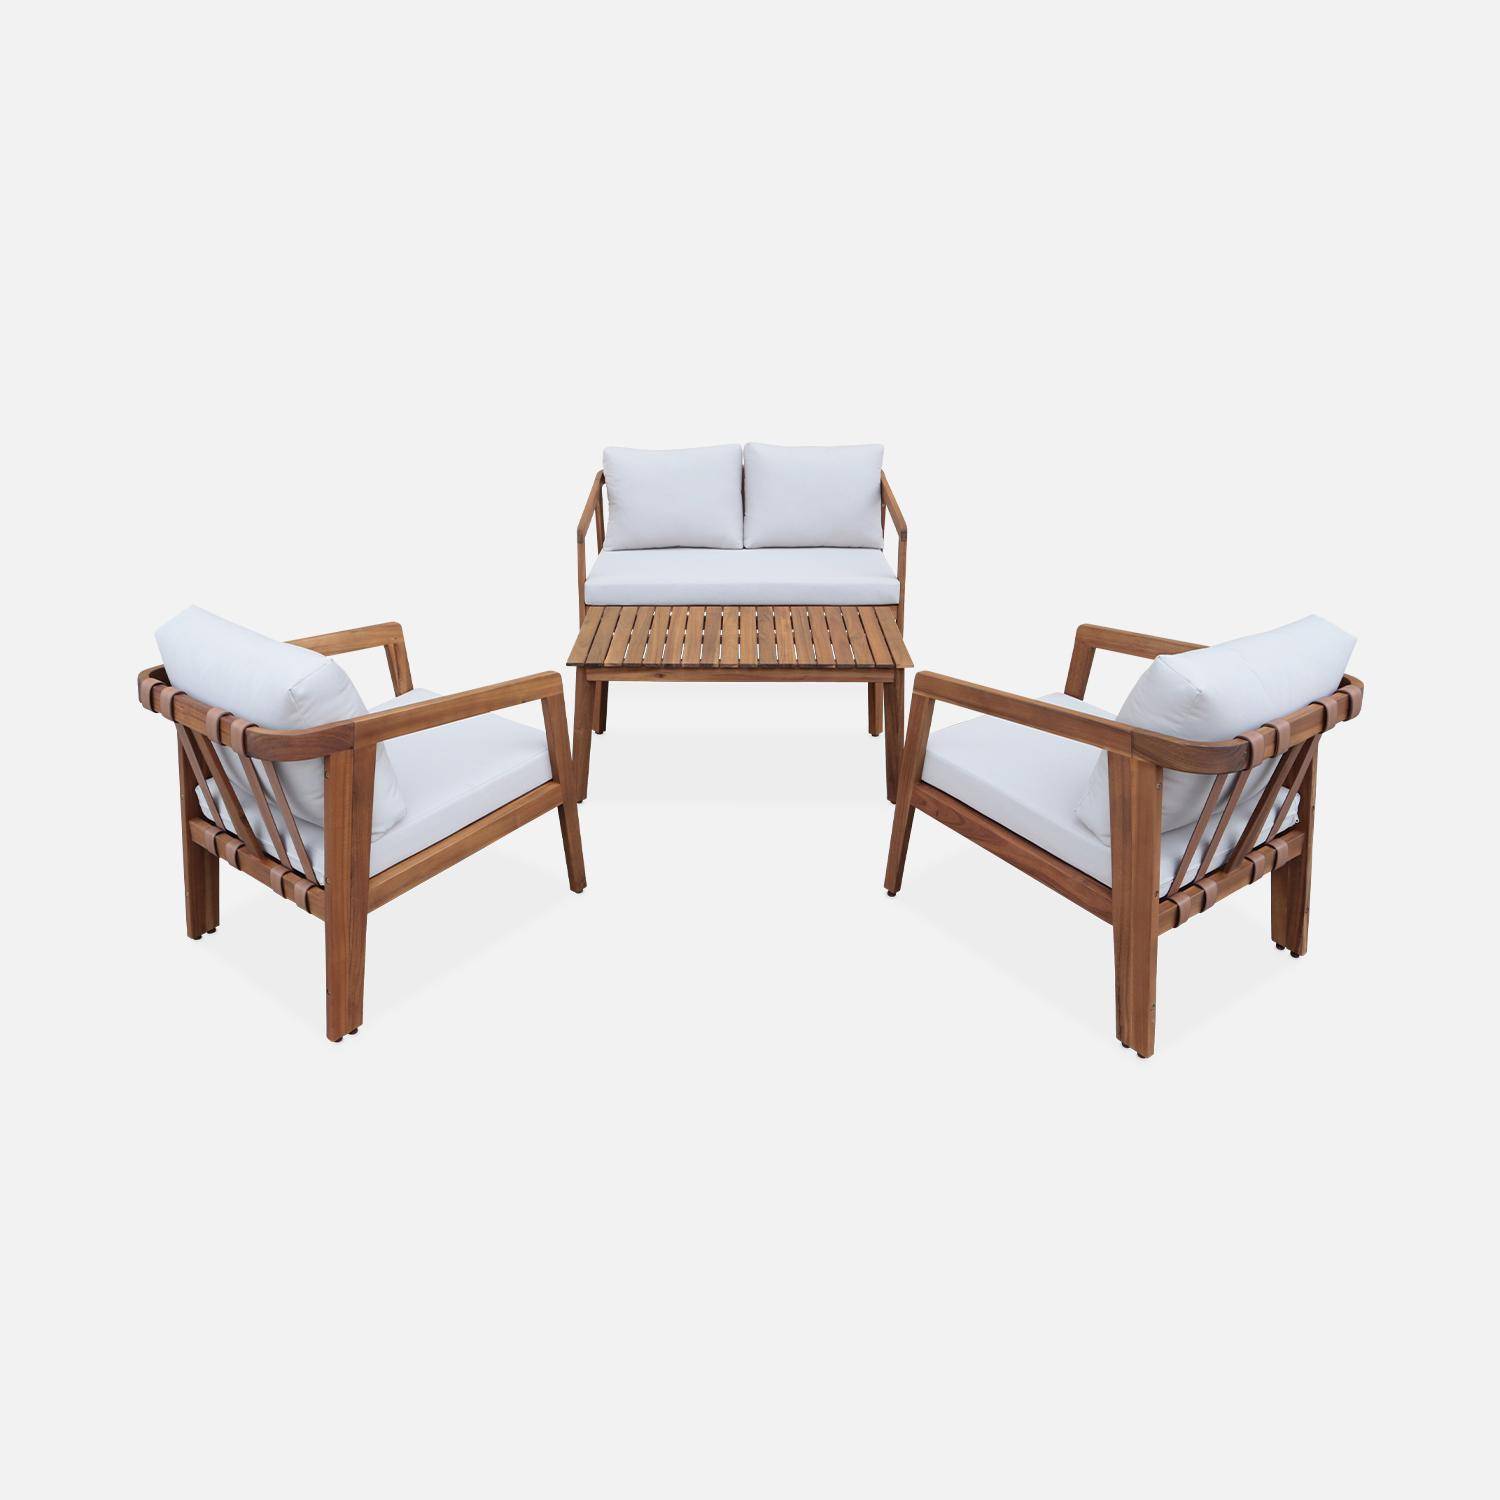 4-seater wooden garden sofa set, beige, natural acacia, 108.5 x 74.7 x 64.5cm Photo4